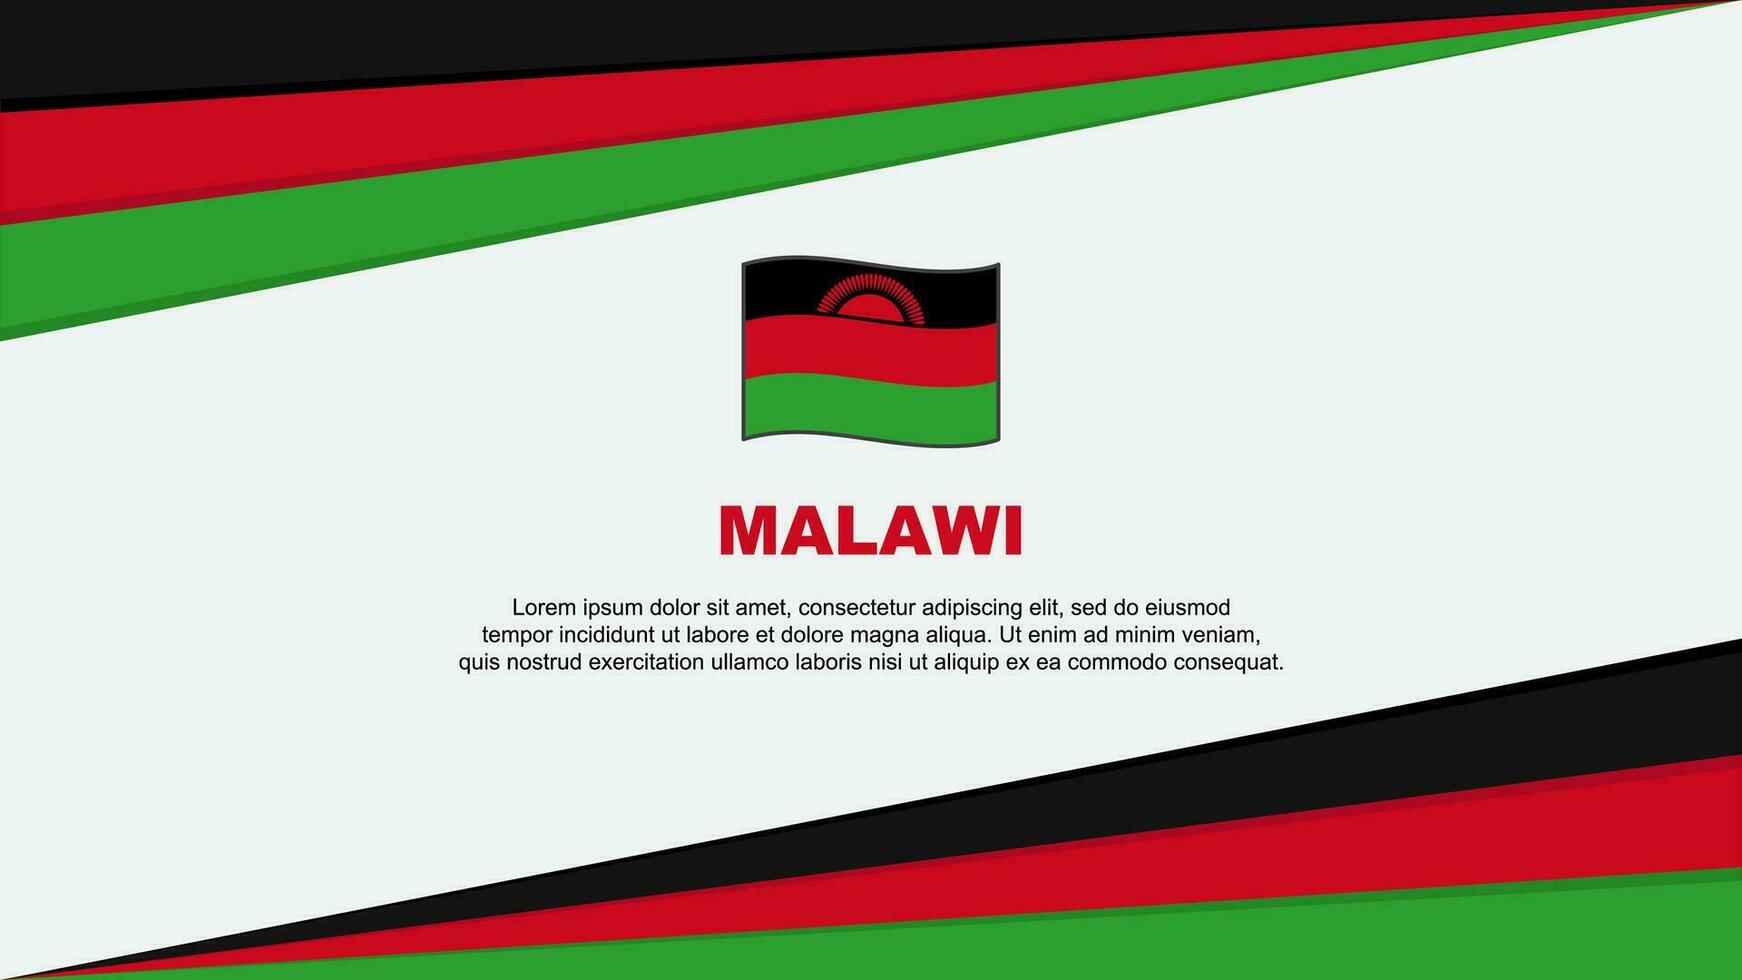 Malawi vlag abstract achtergrond ontwerp sjabloon. Malawi onafhankelijkheid dag banier tekenfilm vector illustratie. Malawi ontwerp